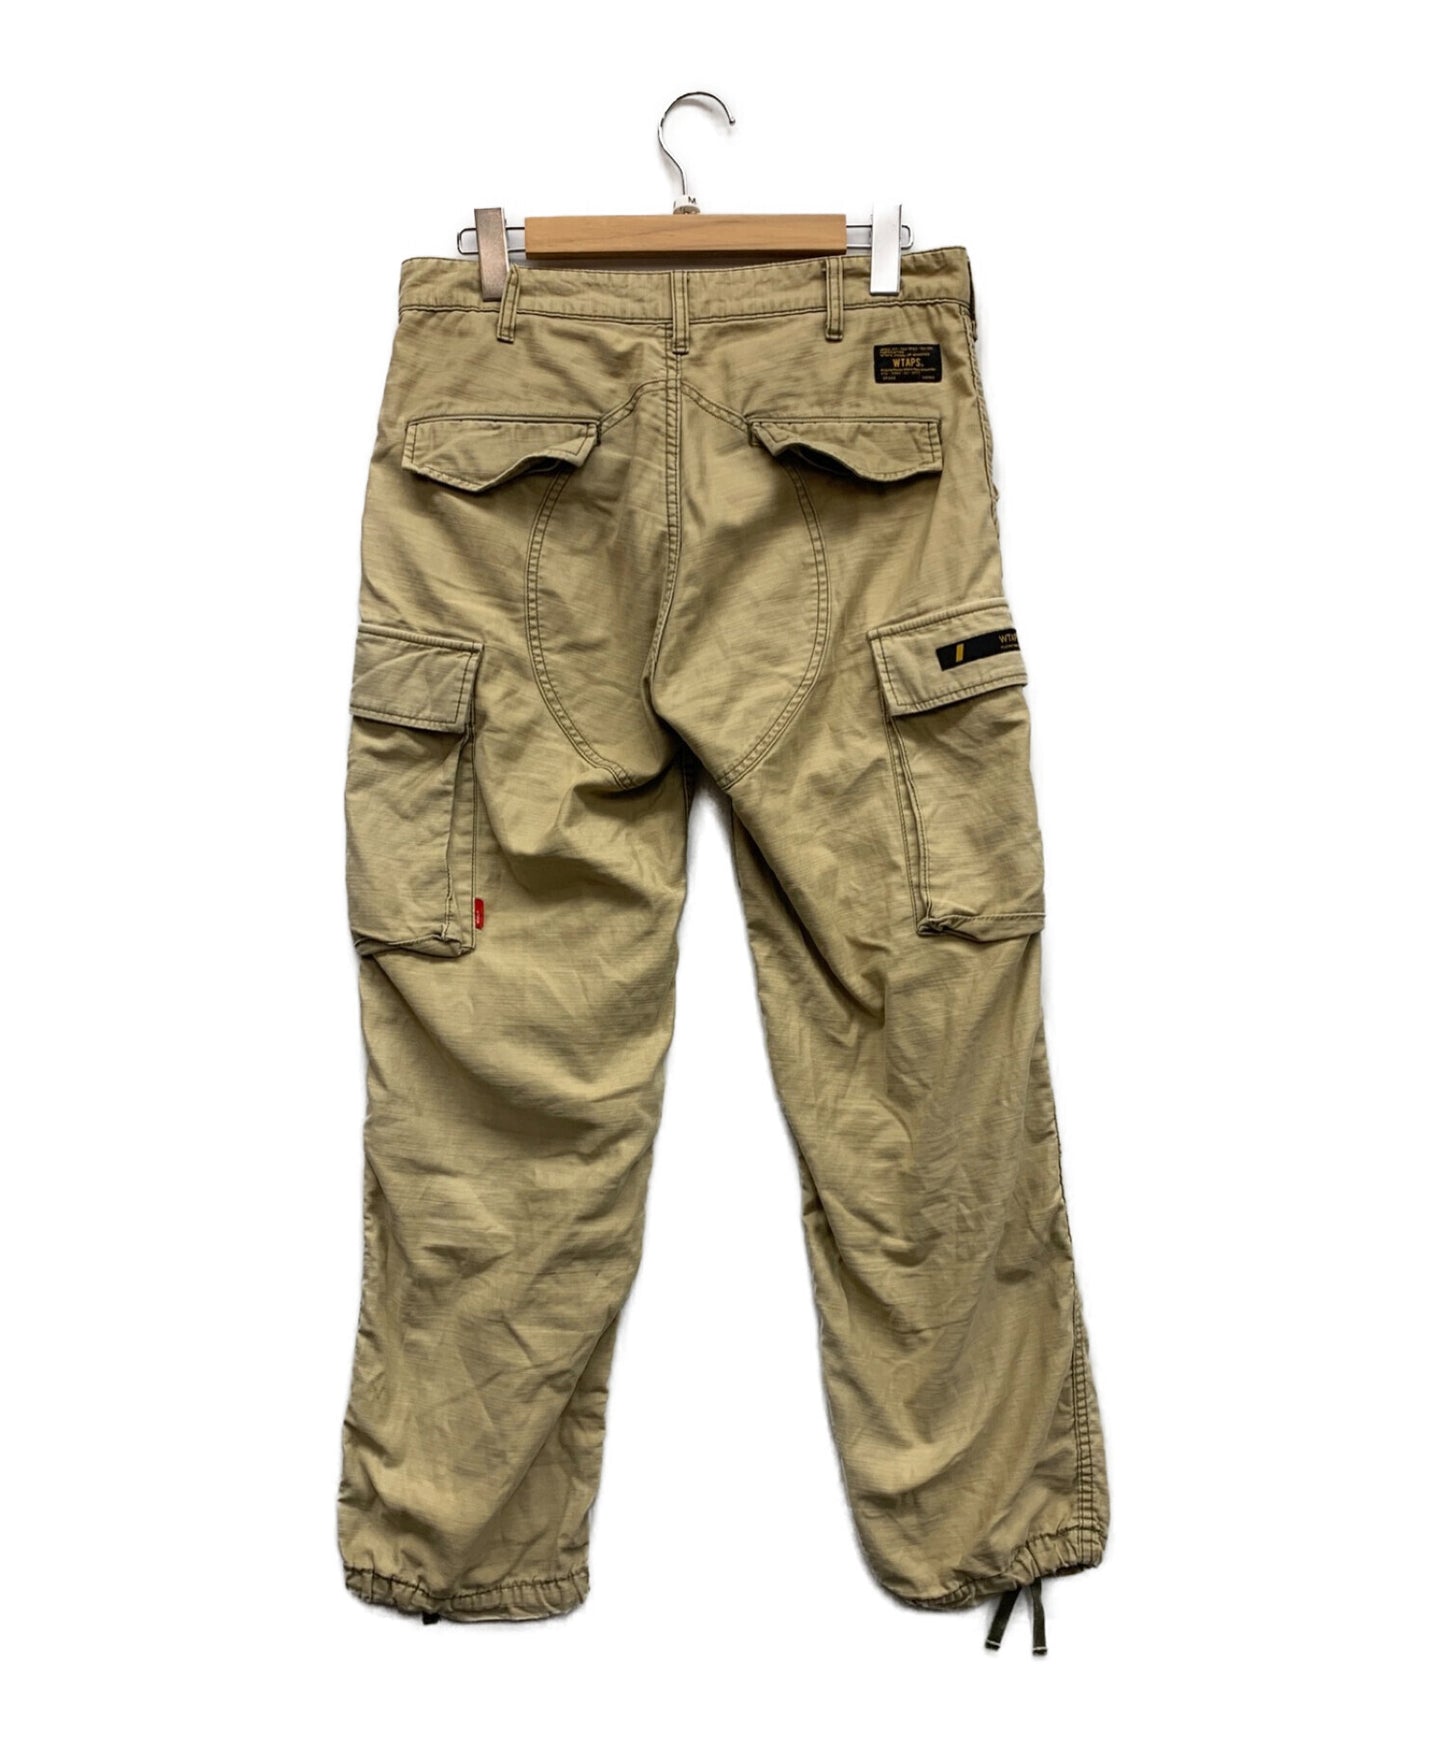 WTAPS cargo pants 142GWDT-PTM08 | Archive Factory